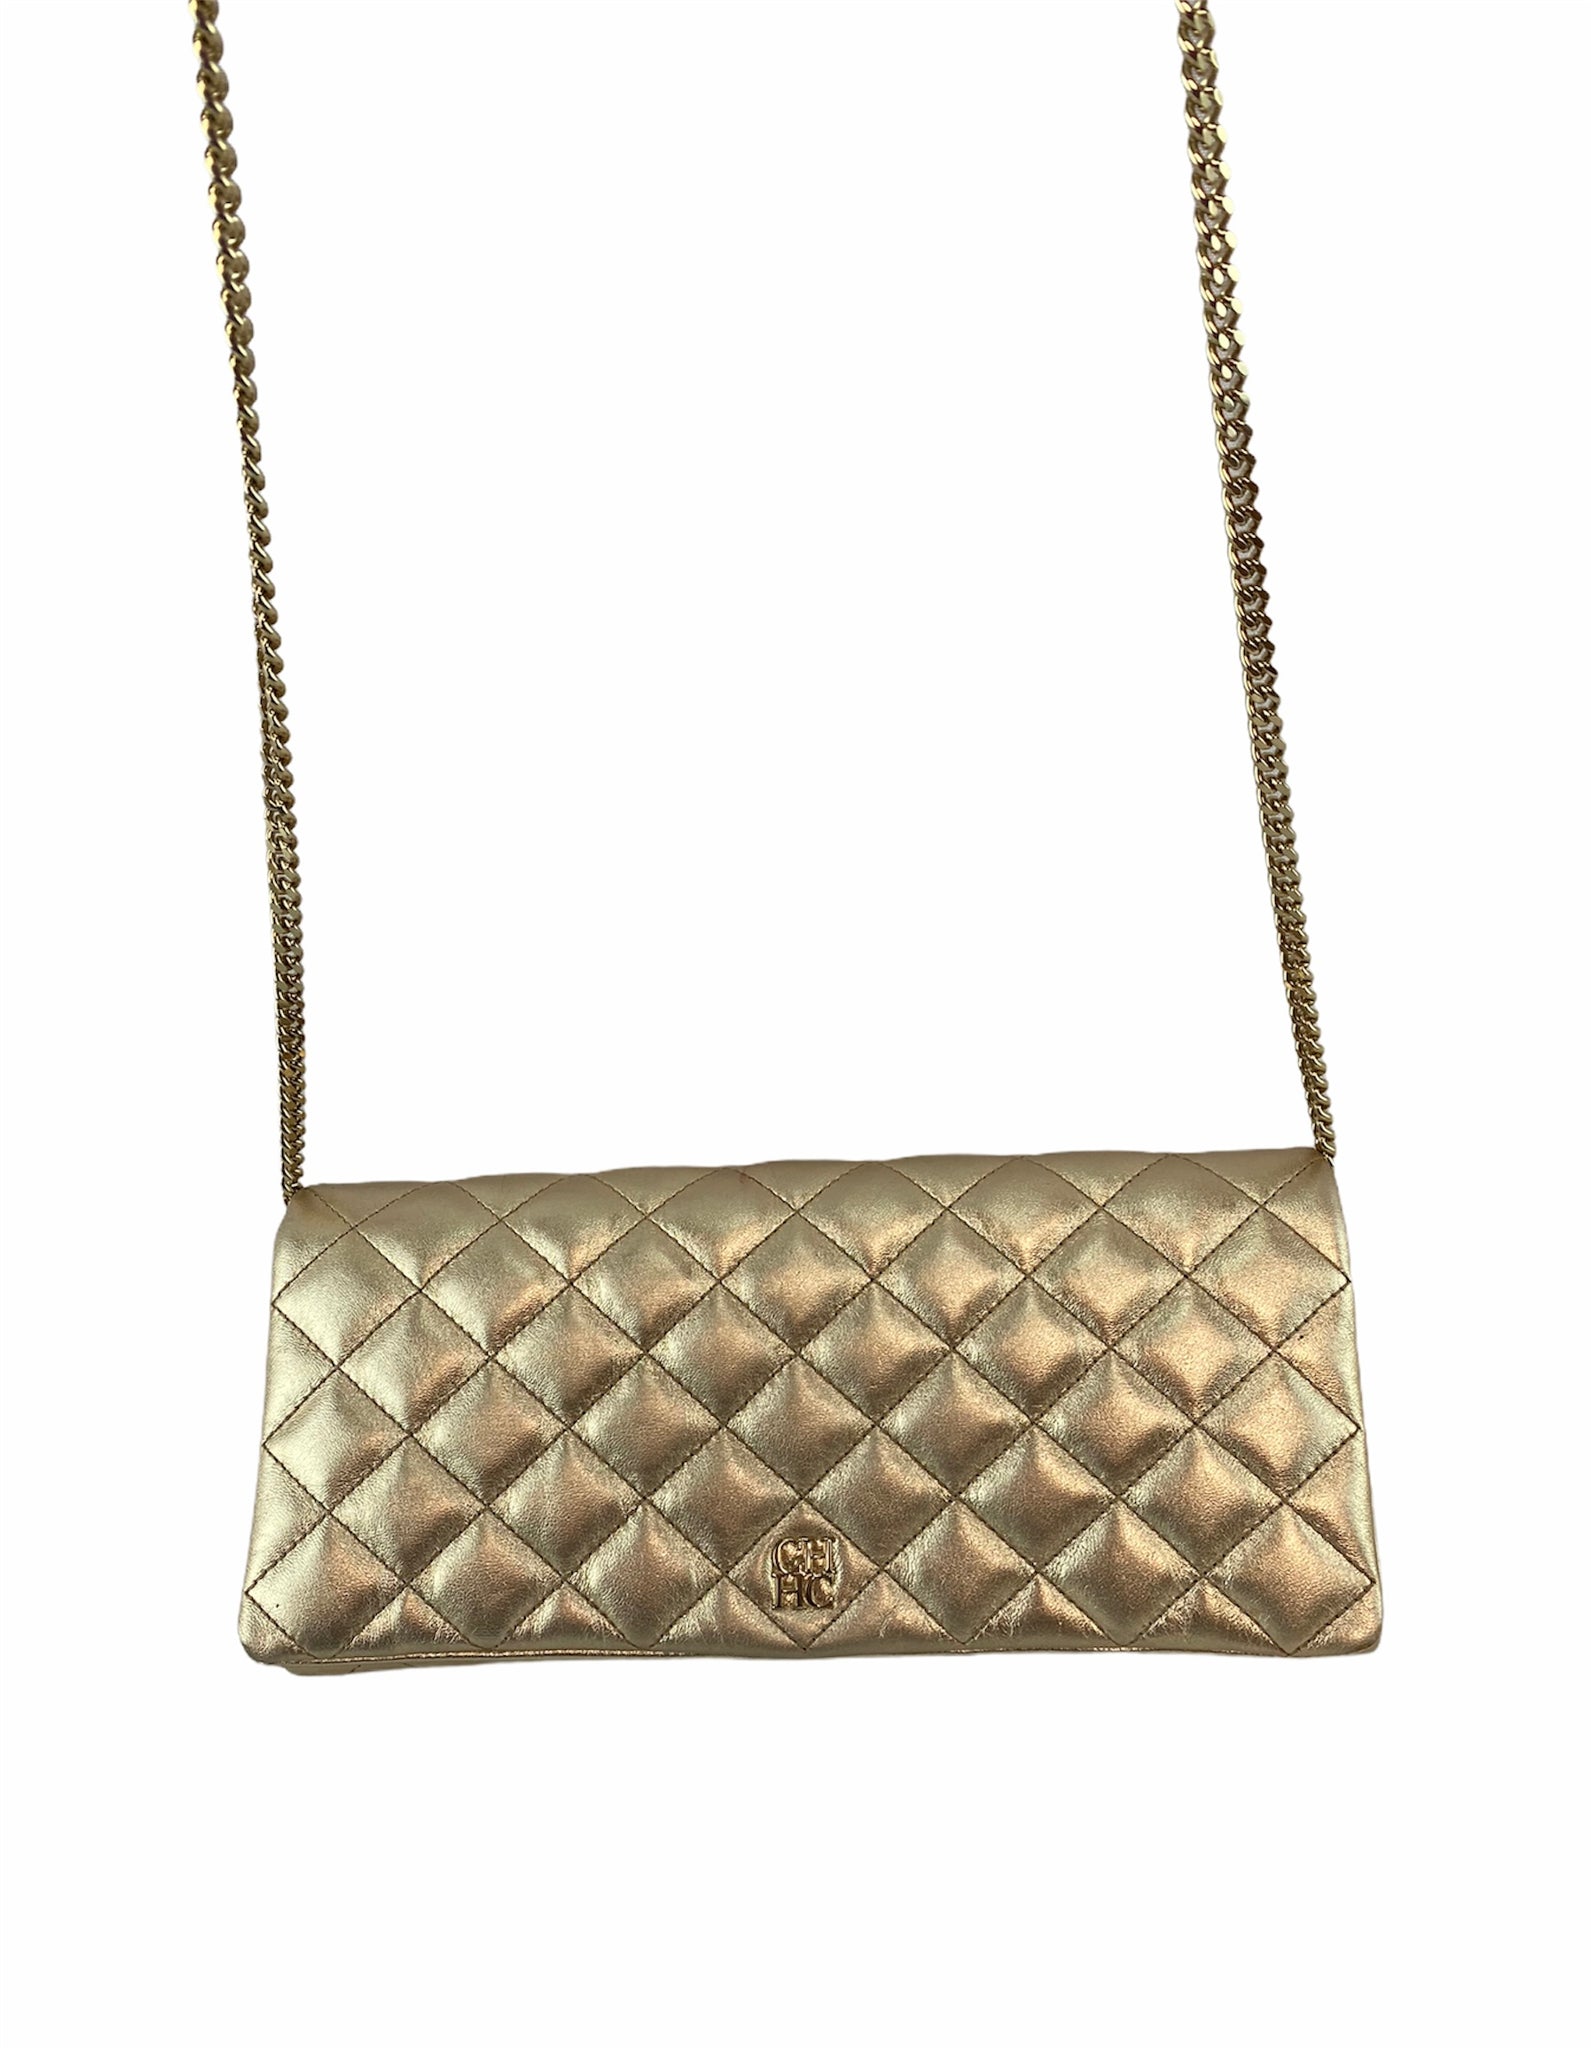 Carolina Herrera Quilted Gold Chain Crossbody Bag/ Clutch – thankunext.us